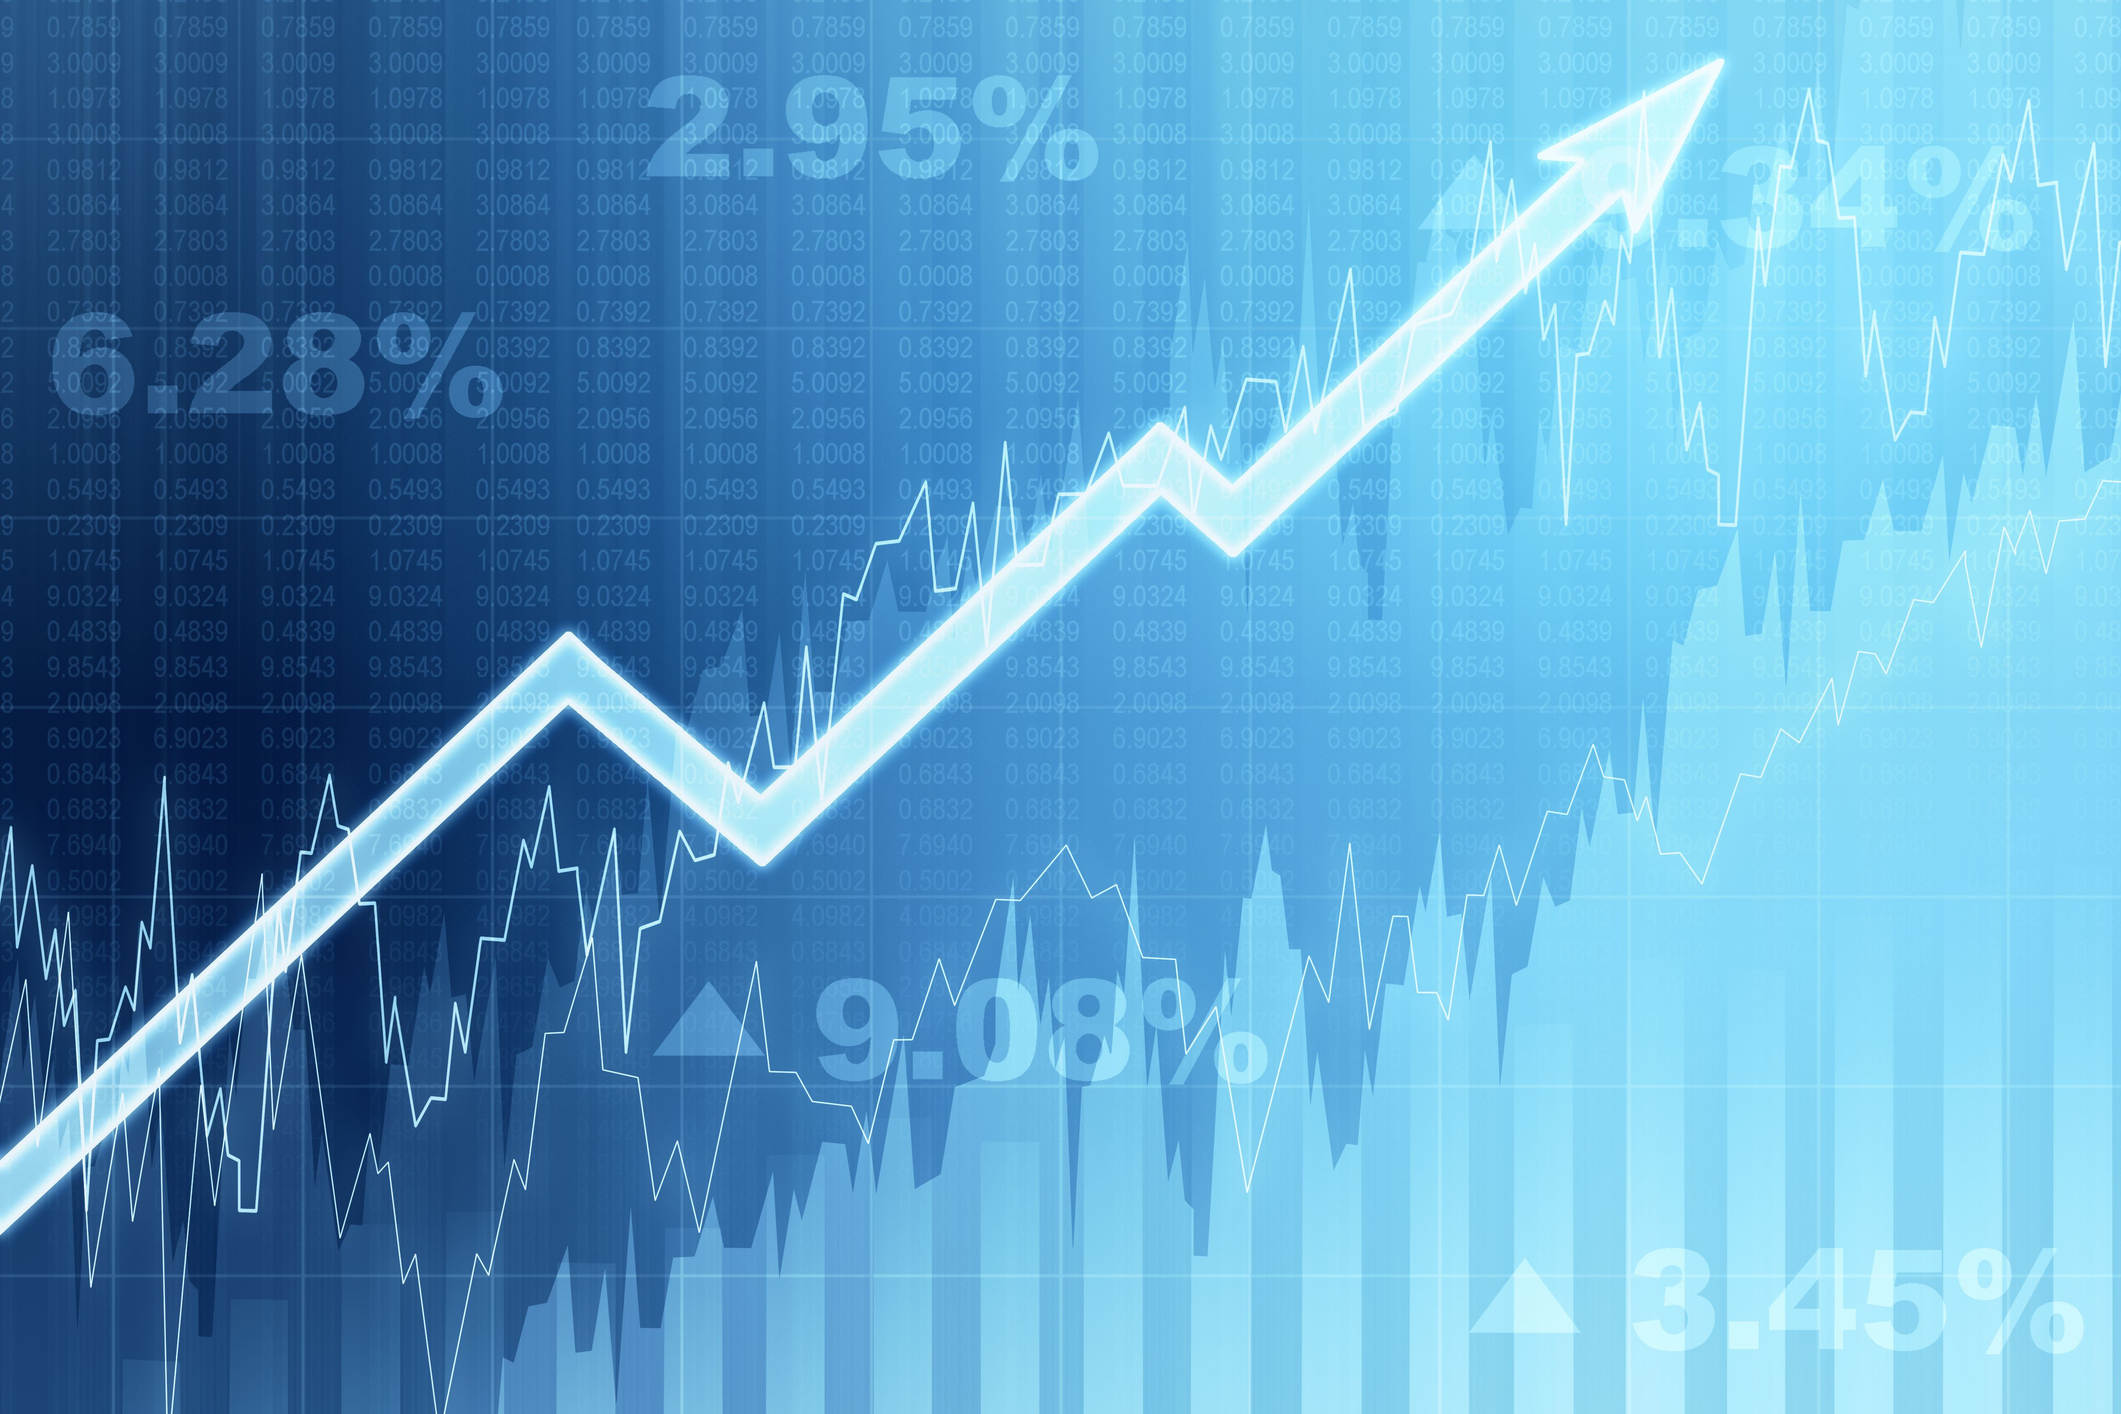 A stock chart showing an arrow going up.